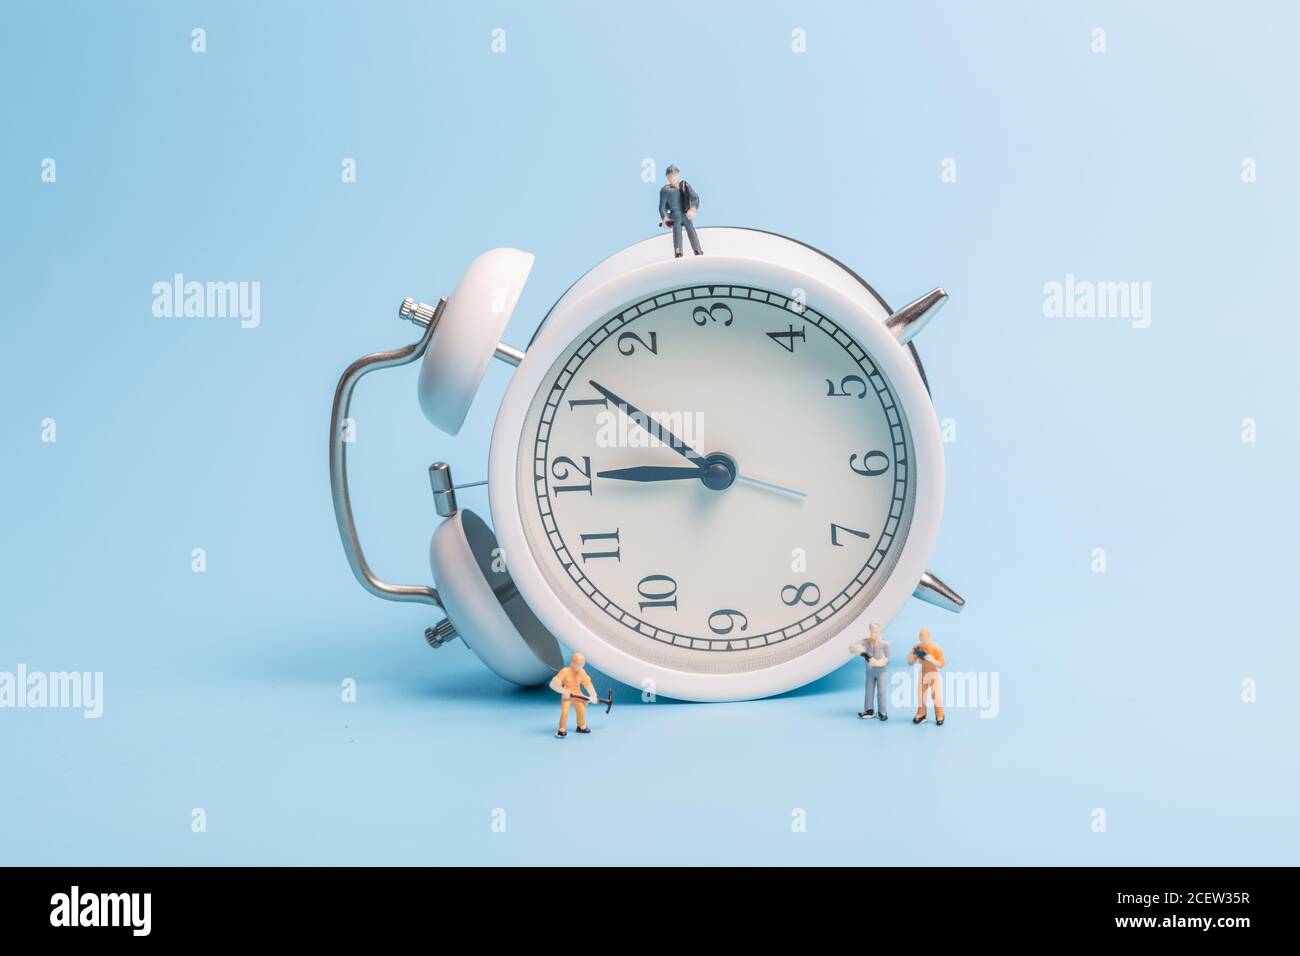 Alarm clock worker on blue background Stock Photo